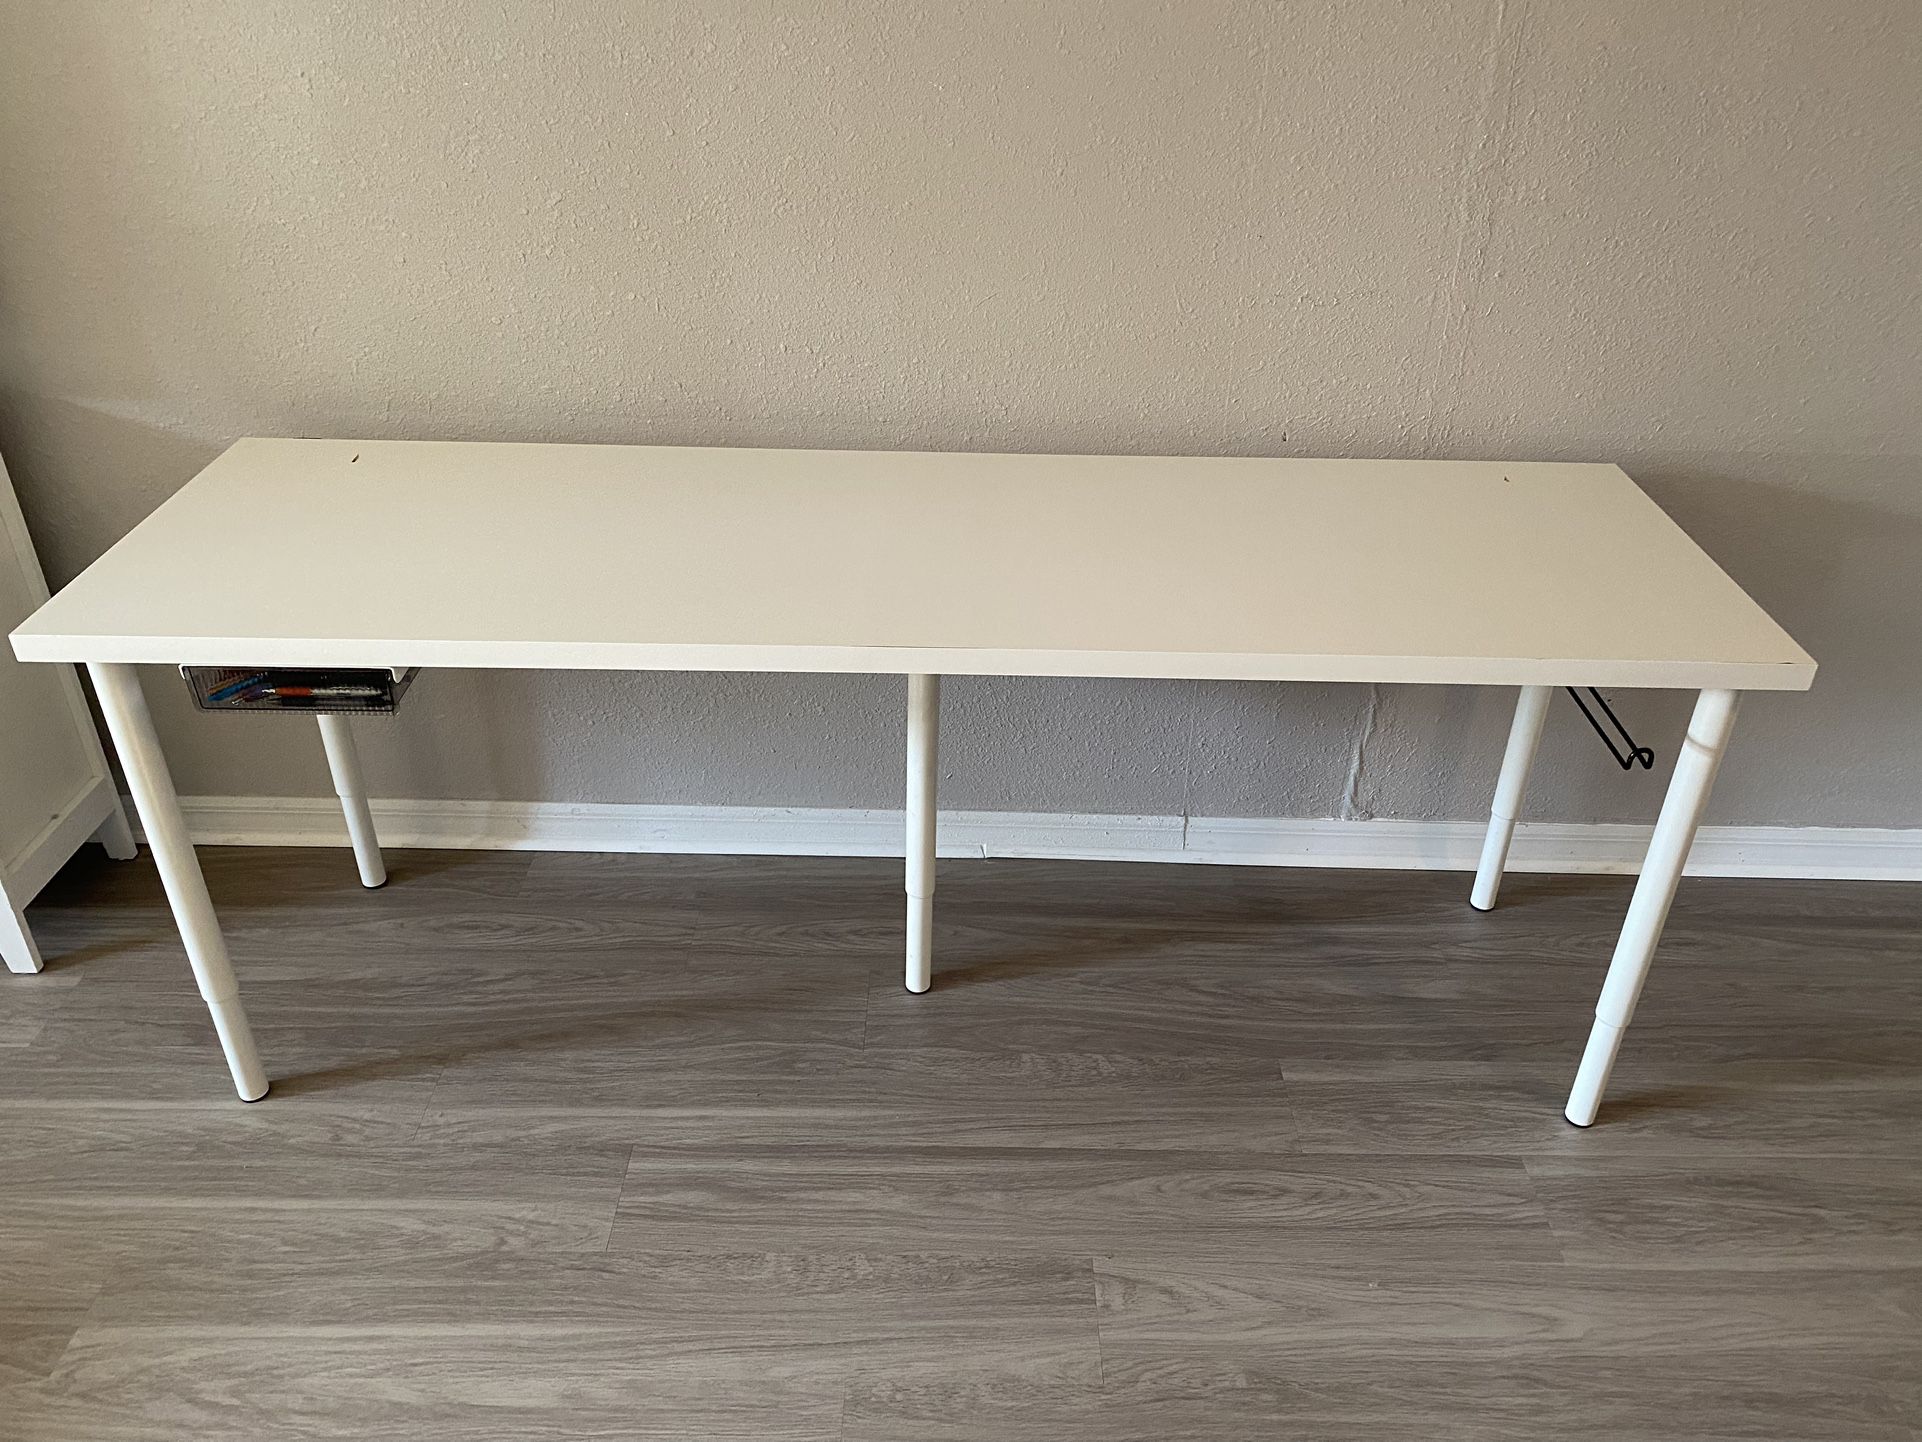 IKEA White Desk 